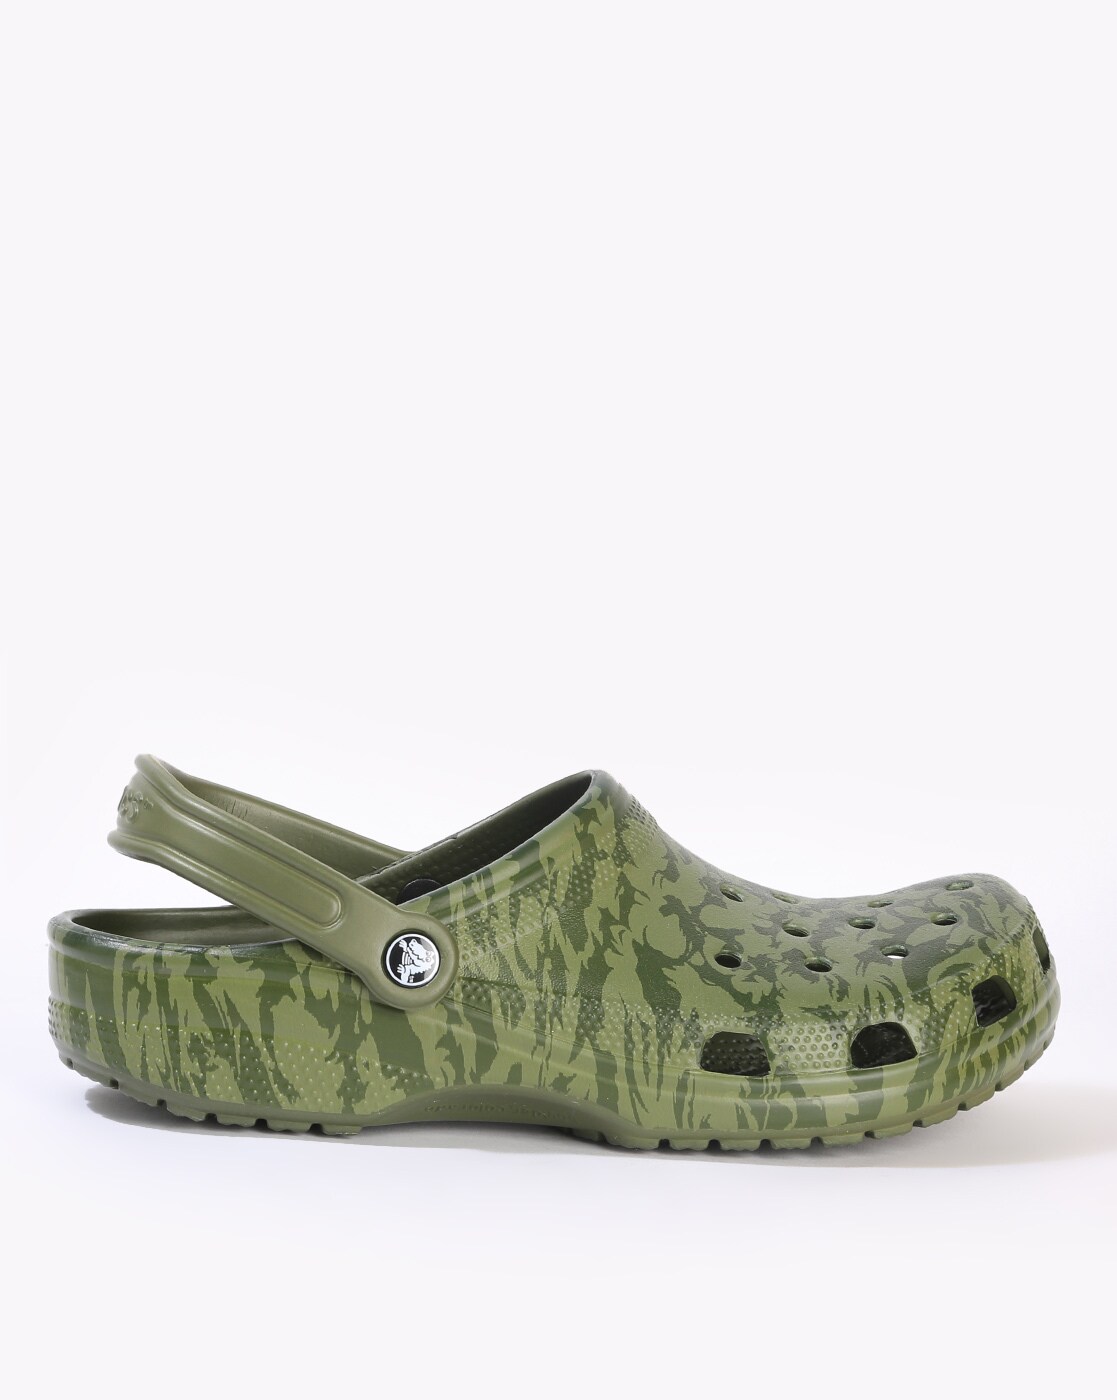 crocs army